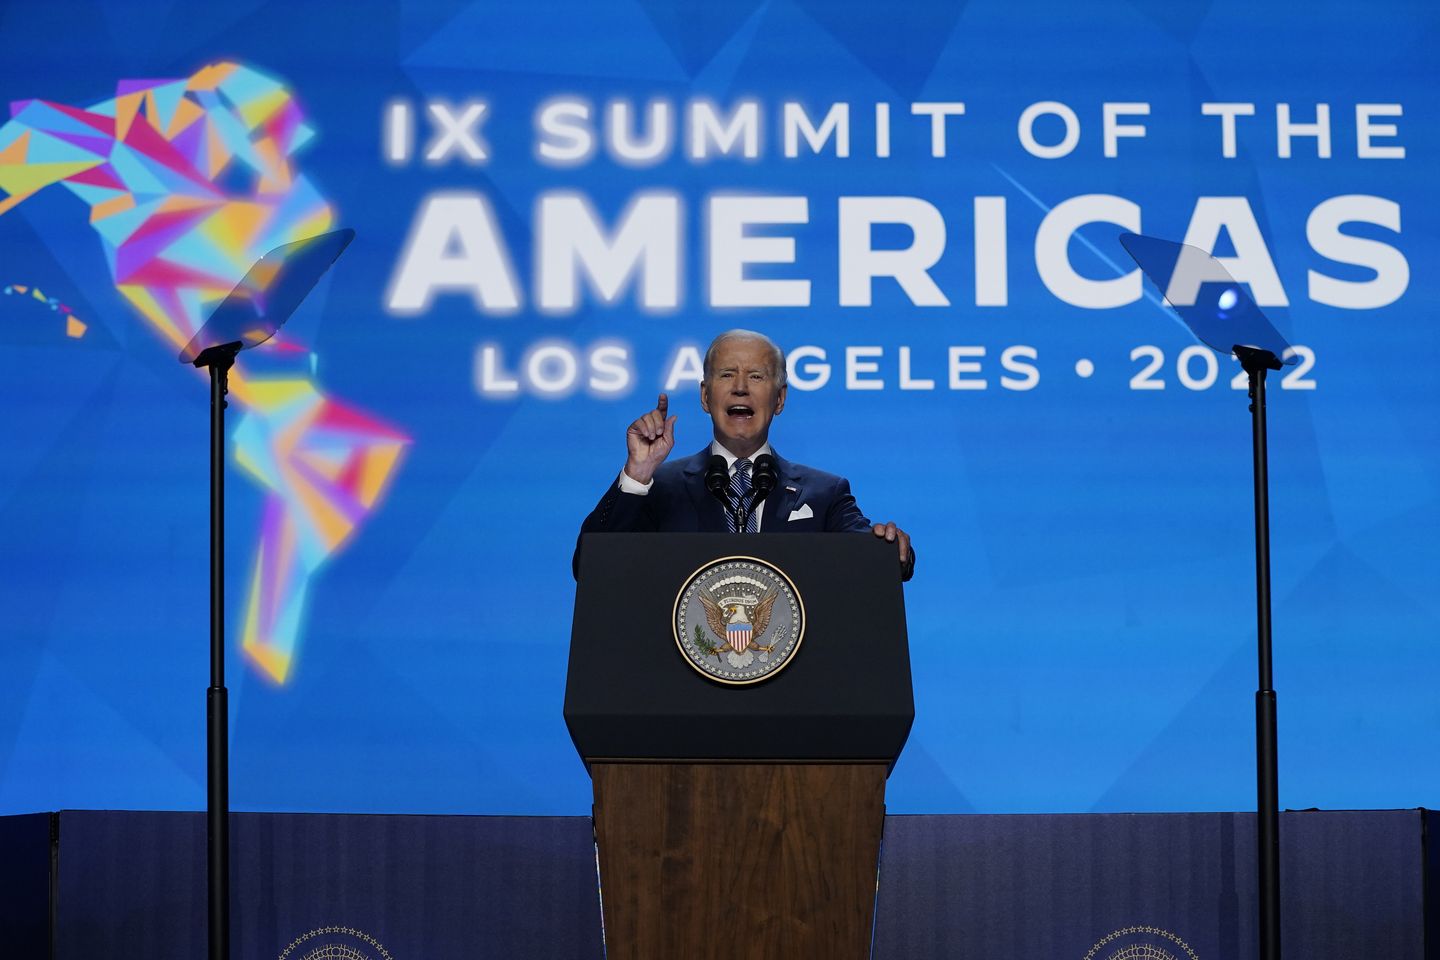 Joe Biden kicks off Summit of Americas with call for unity